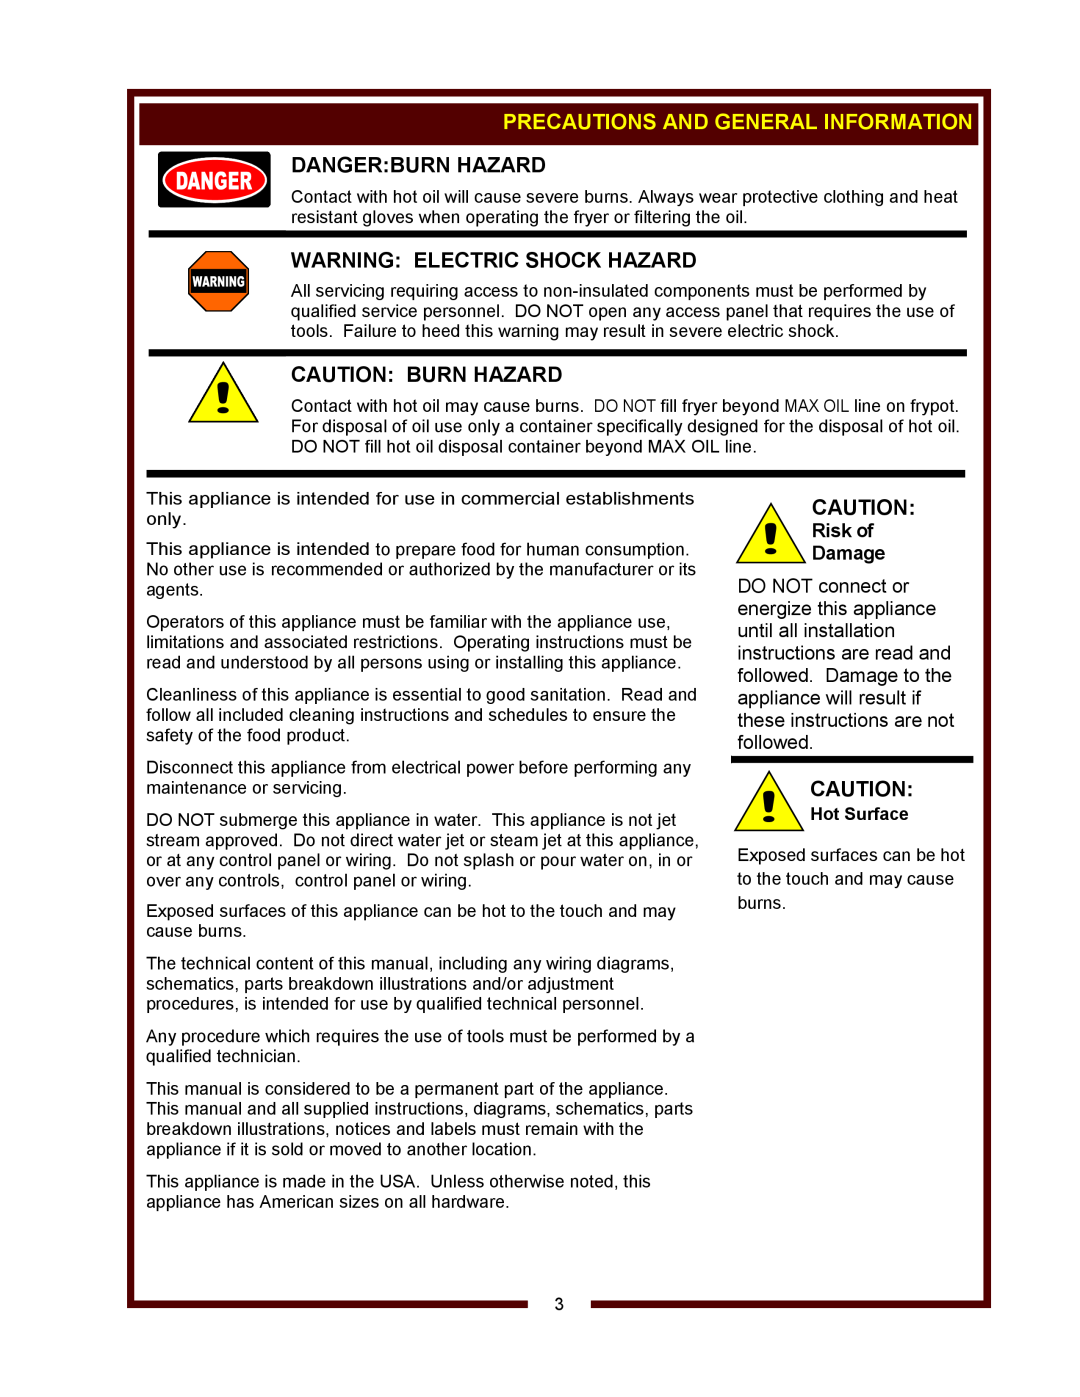 Wells Model LLF-14 Precautions And General Information, Danger Burn Hazard, Warning Electric Shock Hazard, Risk of Damage 